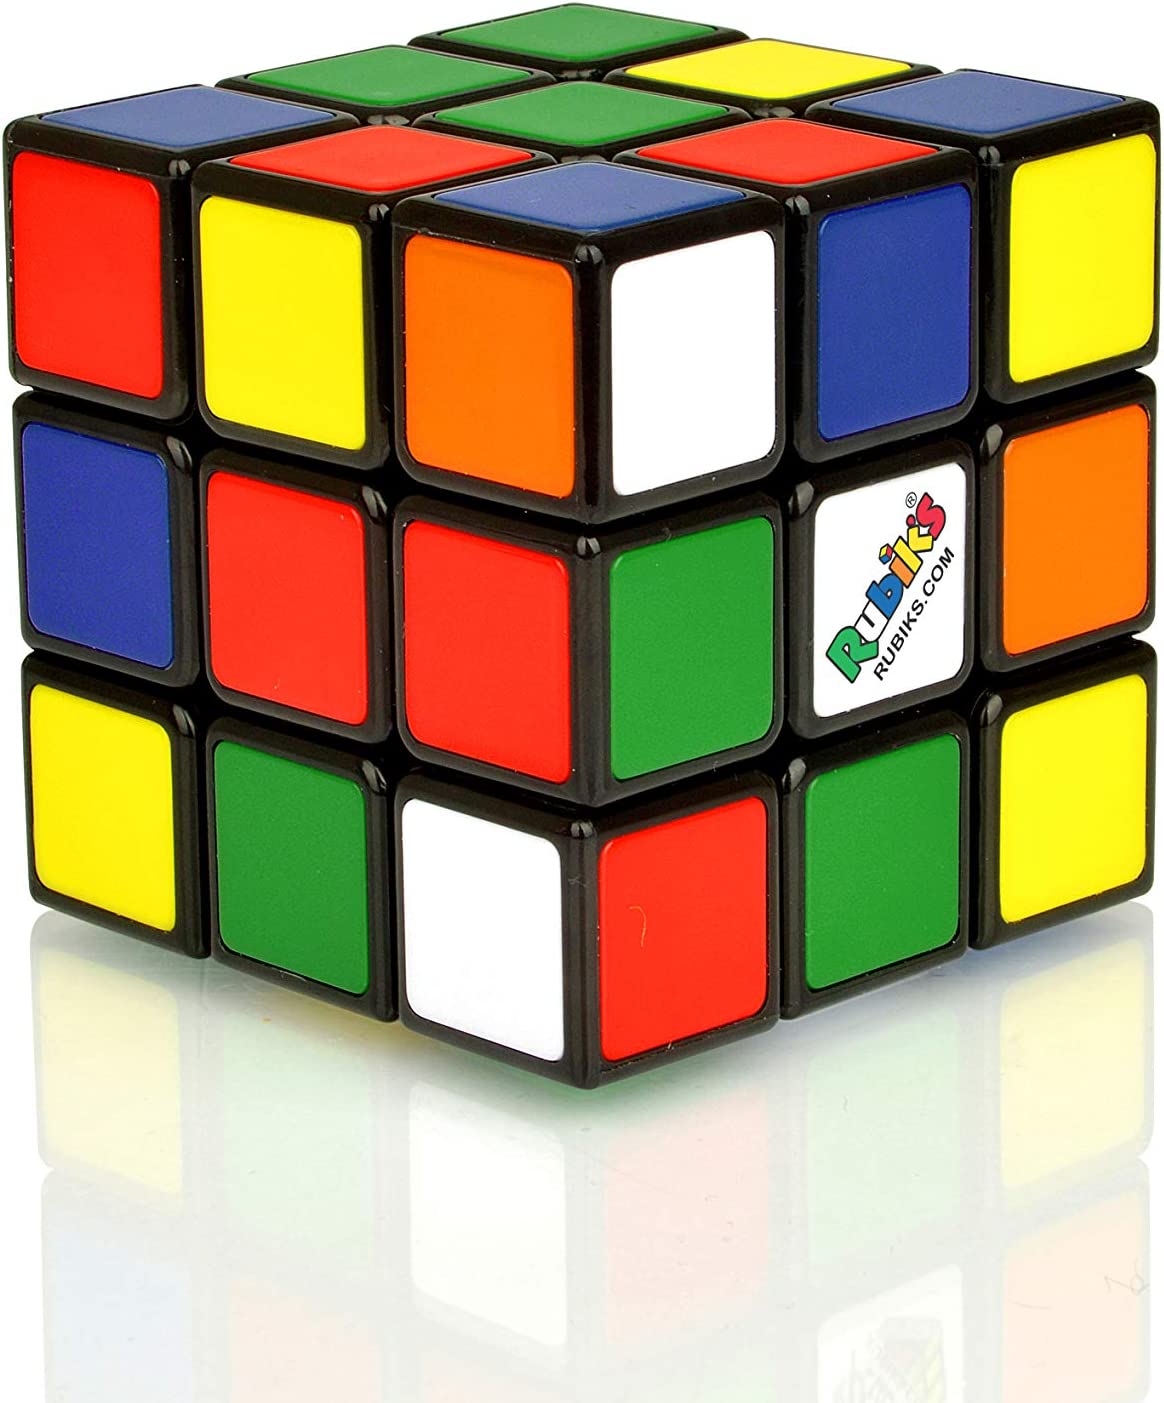 rubik's cube - problem solving skills - puzzles for children